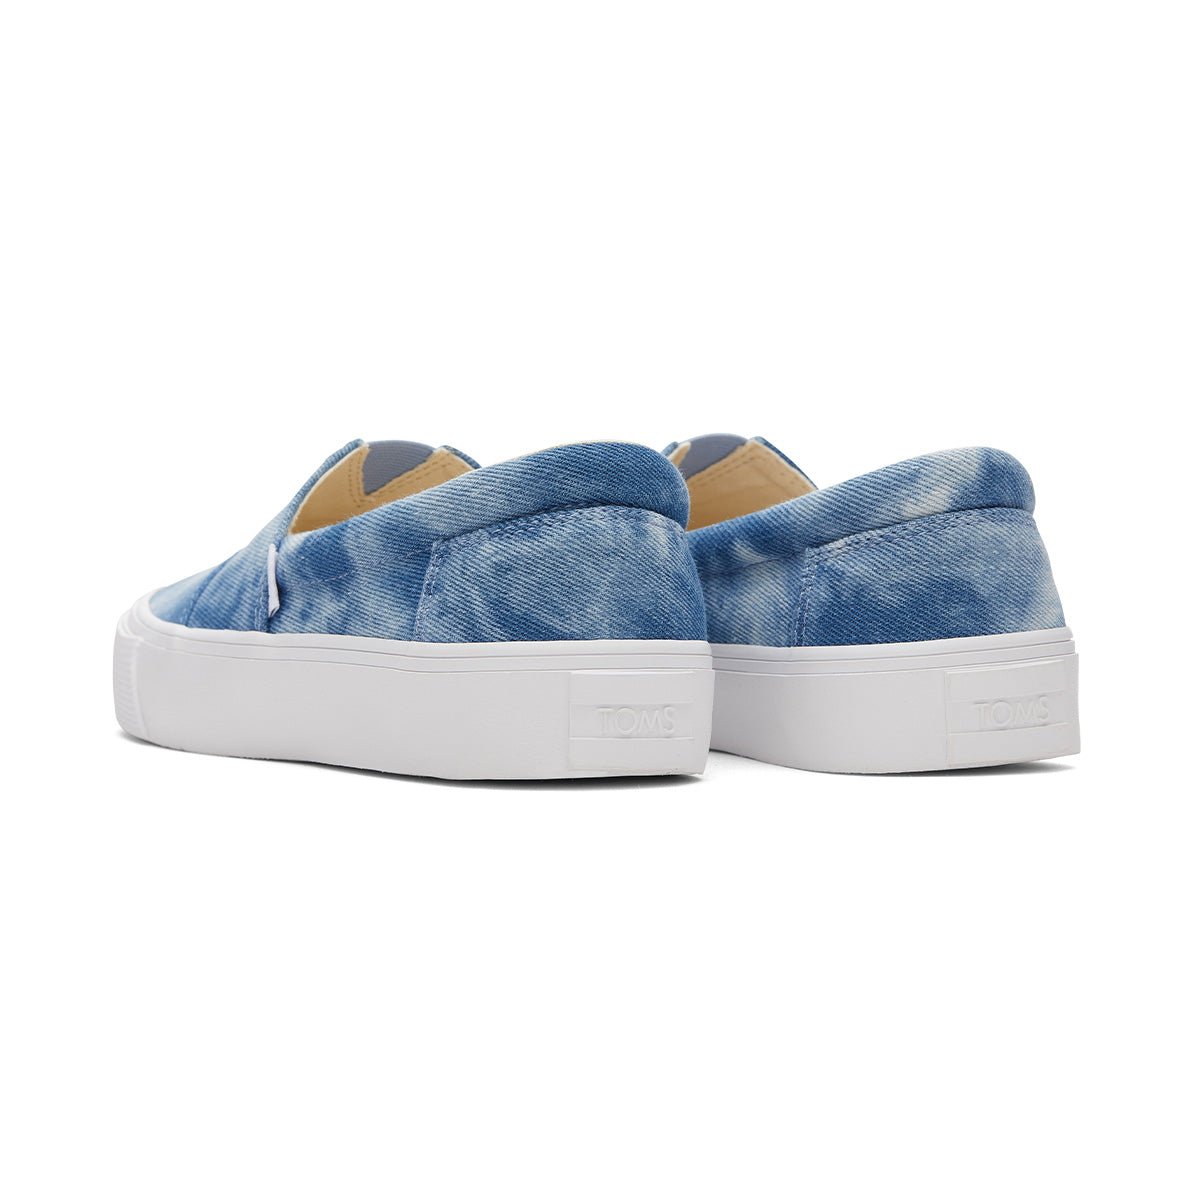 TOMS Sneakers Alpargata Fenix Slip-On Women - Blue Washed Canvas